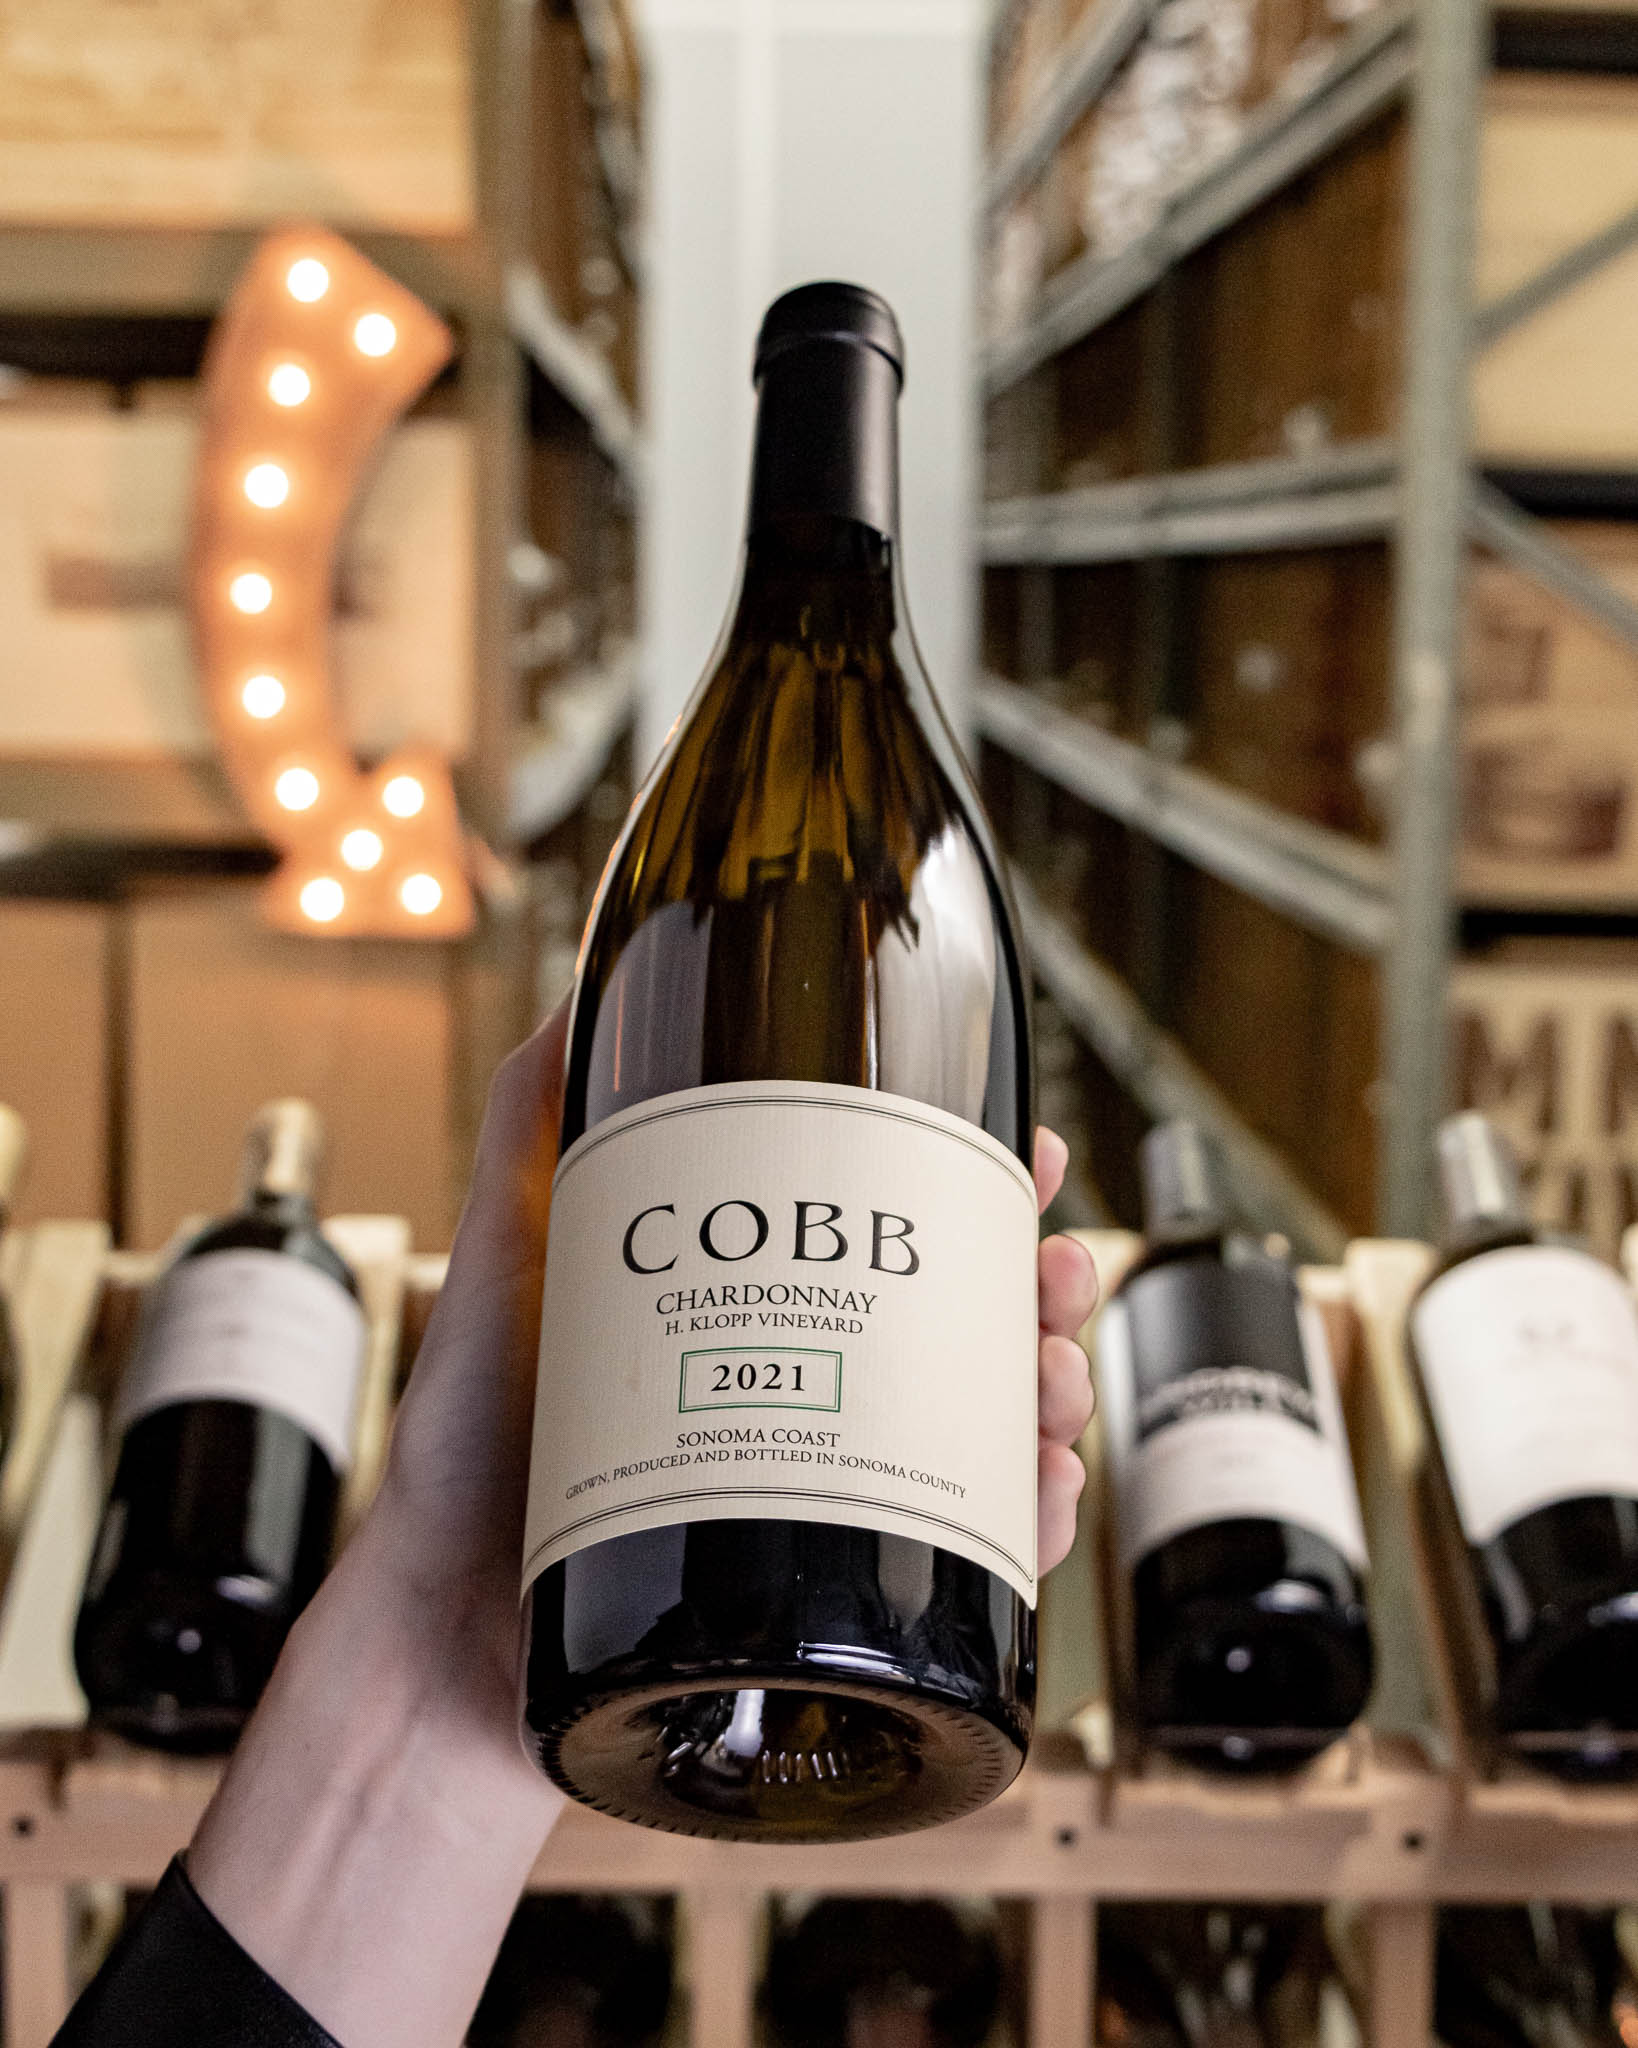 Cobb Chardonnay H. Klopp Vineyard Sonoma Coast 2021